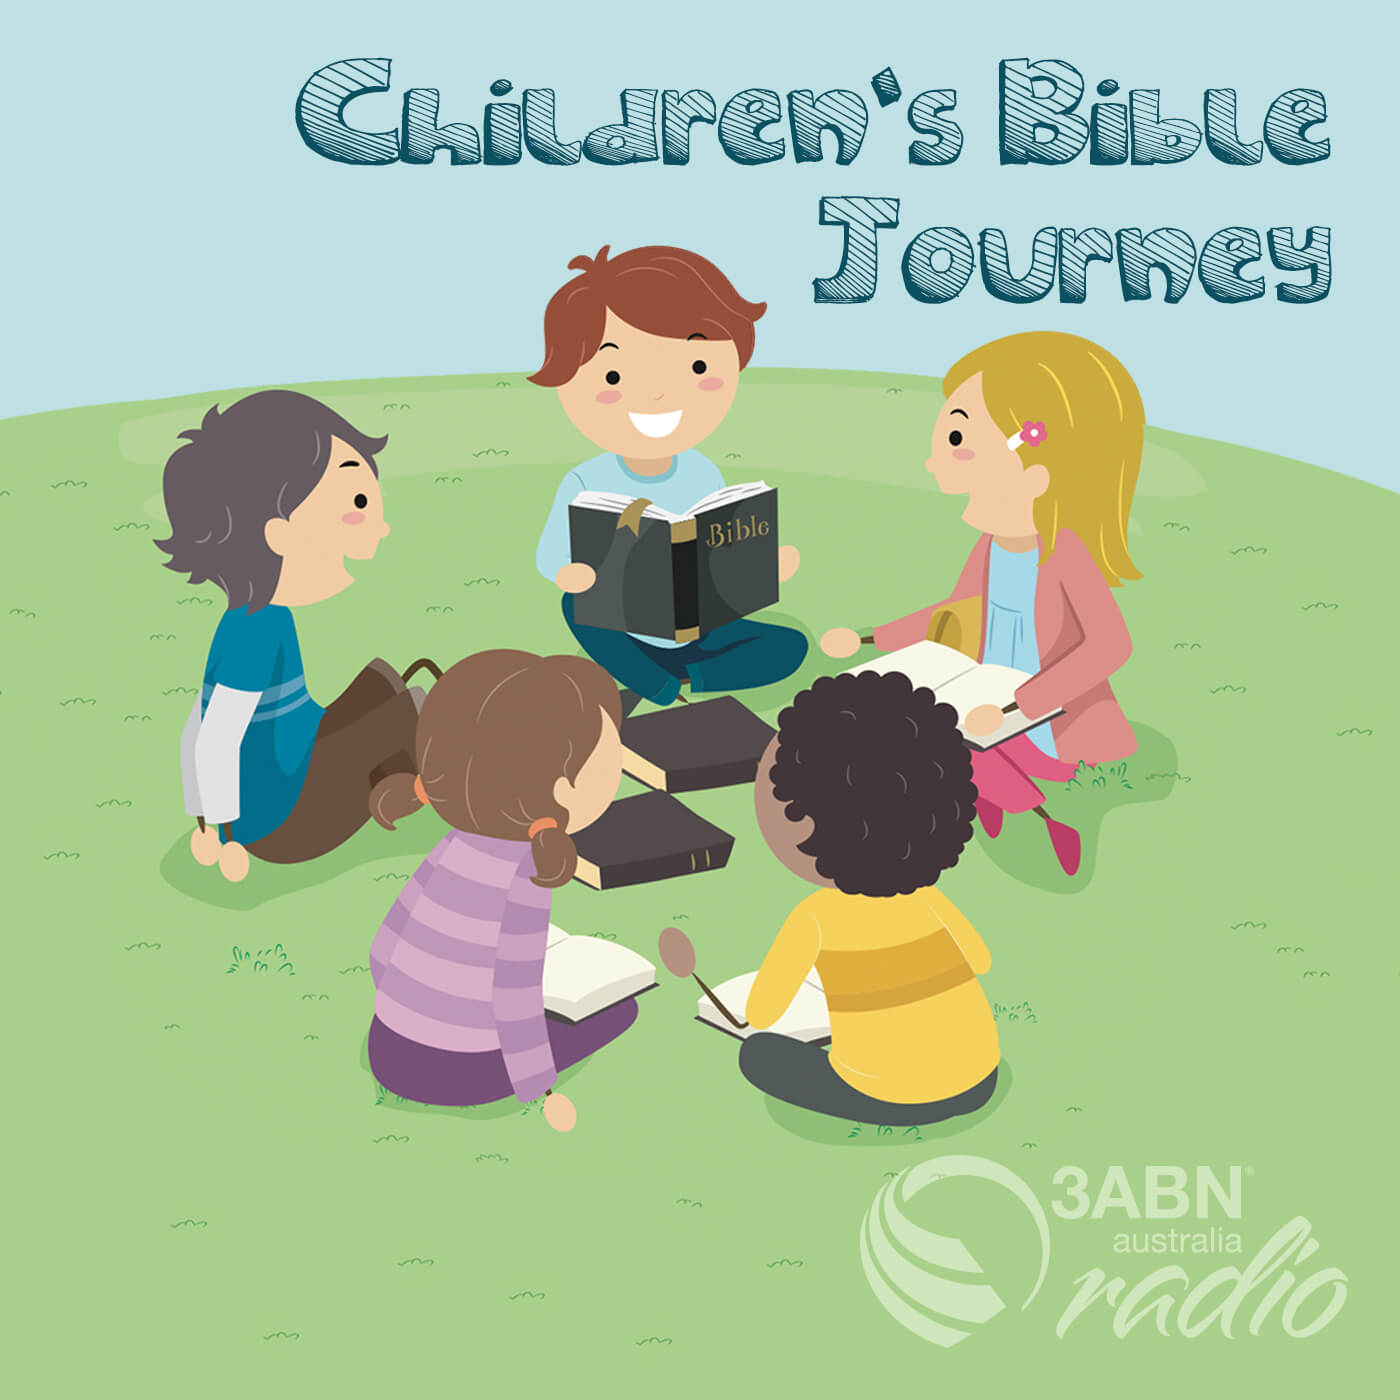 Children's Bible Journey - 2155